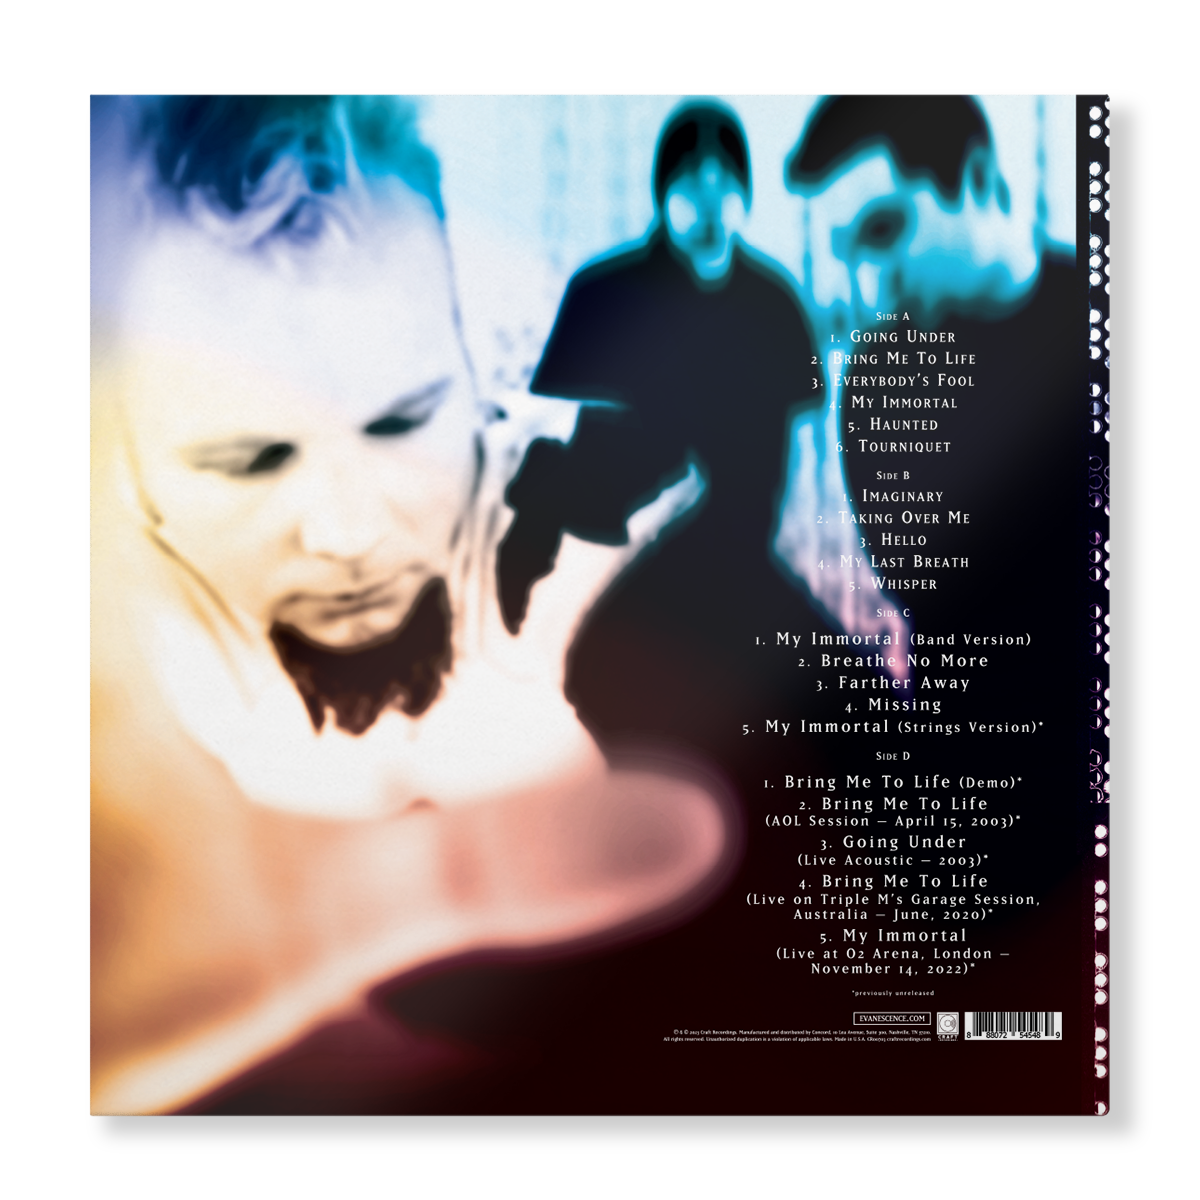 Evanescence: Fallen Vinyl LP (Pink & Black Marble, 20th Anniversary Deluxe 2xLP)